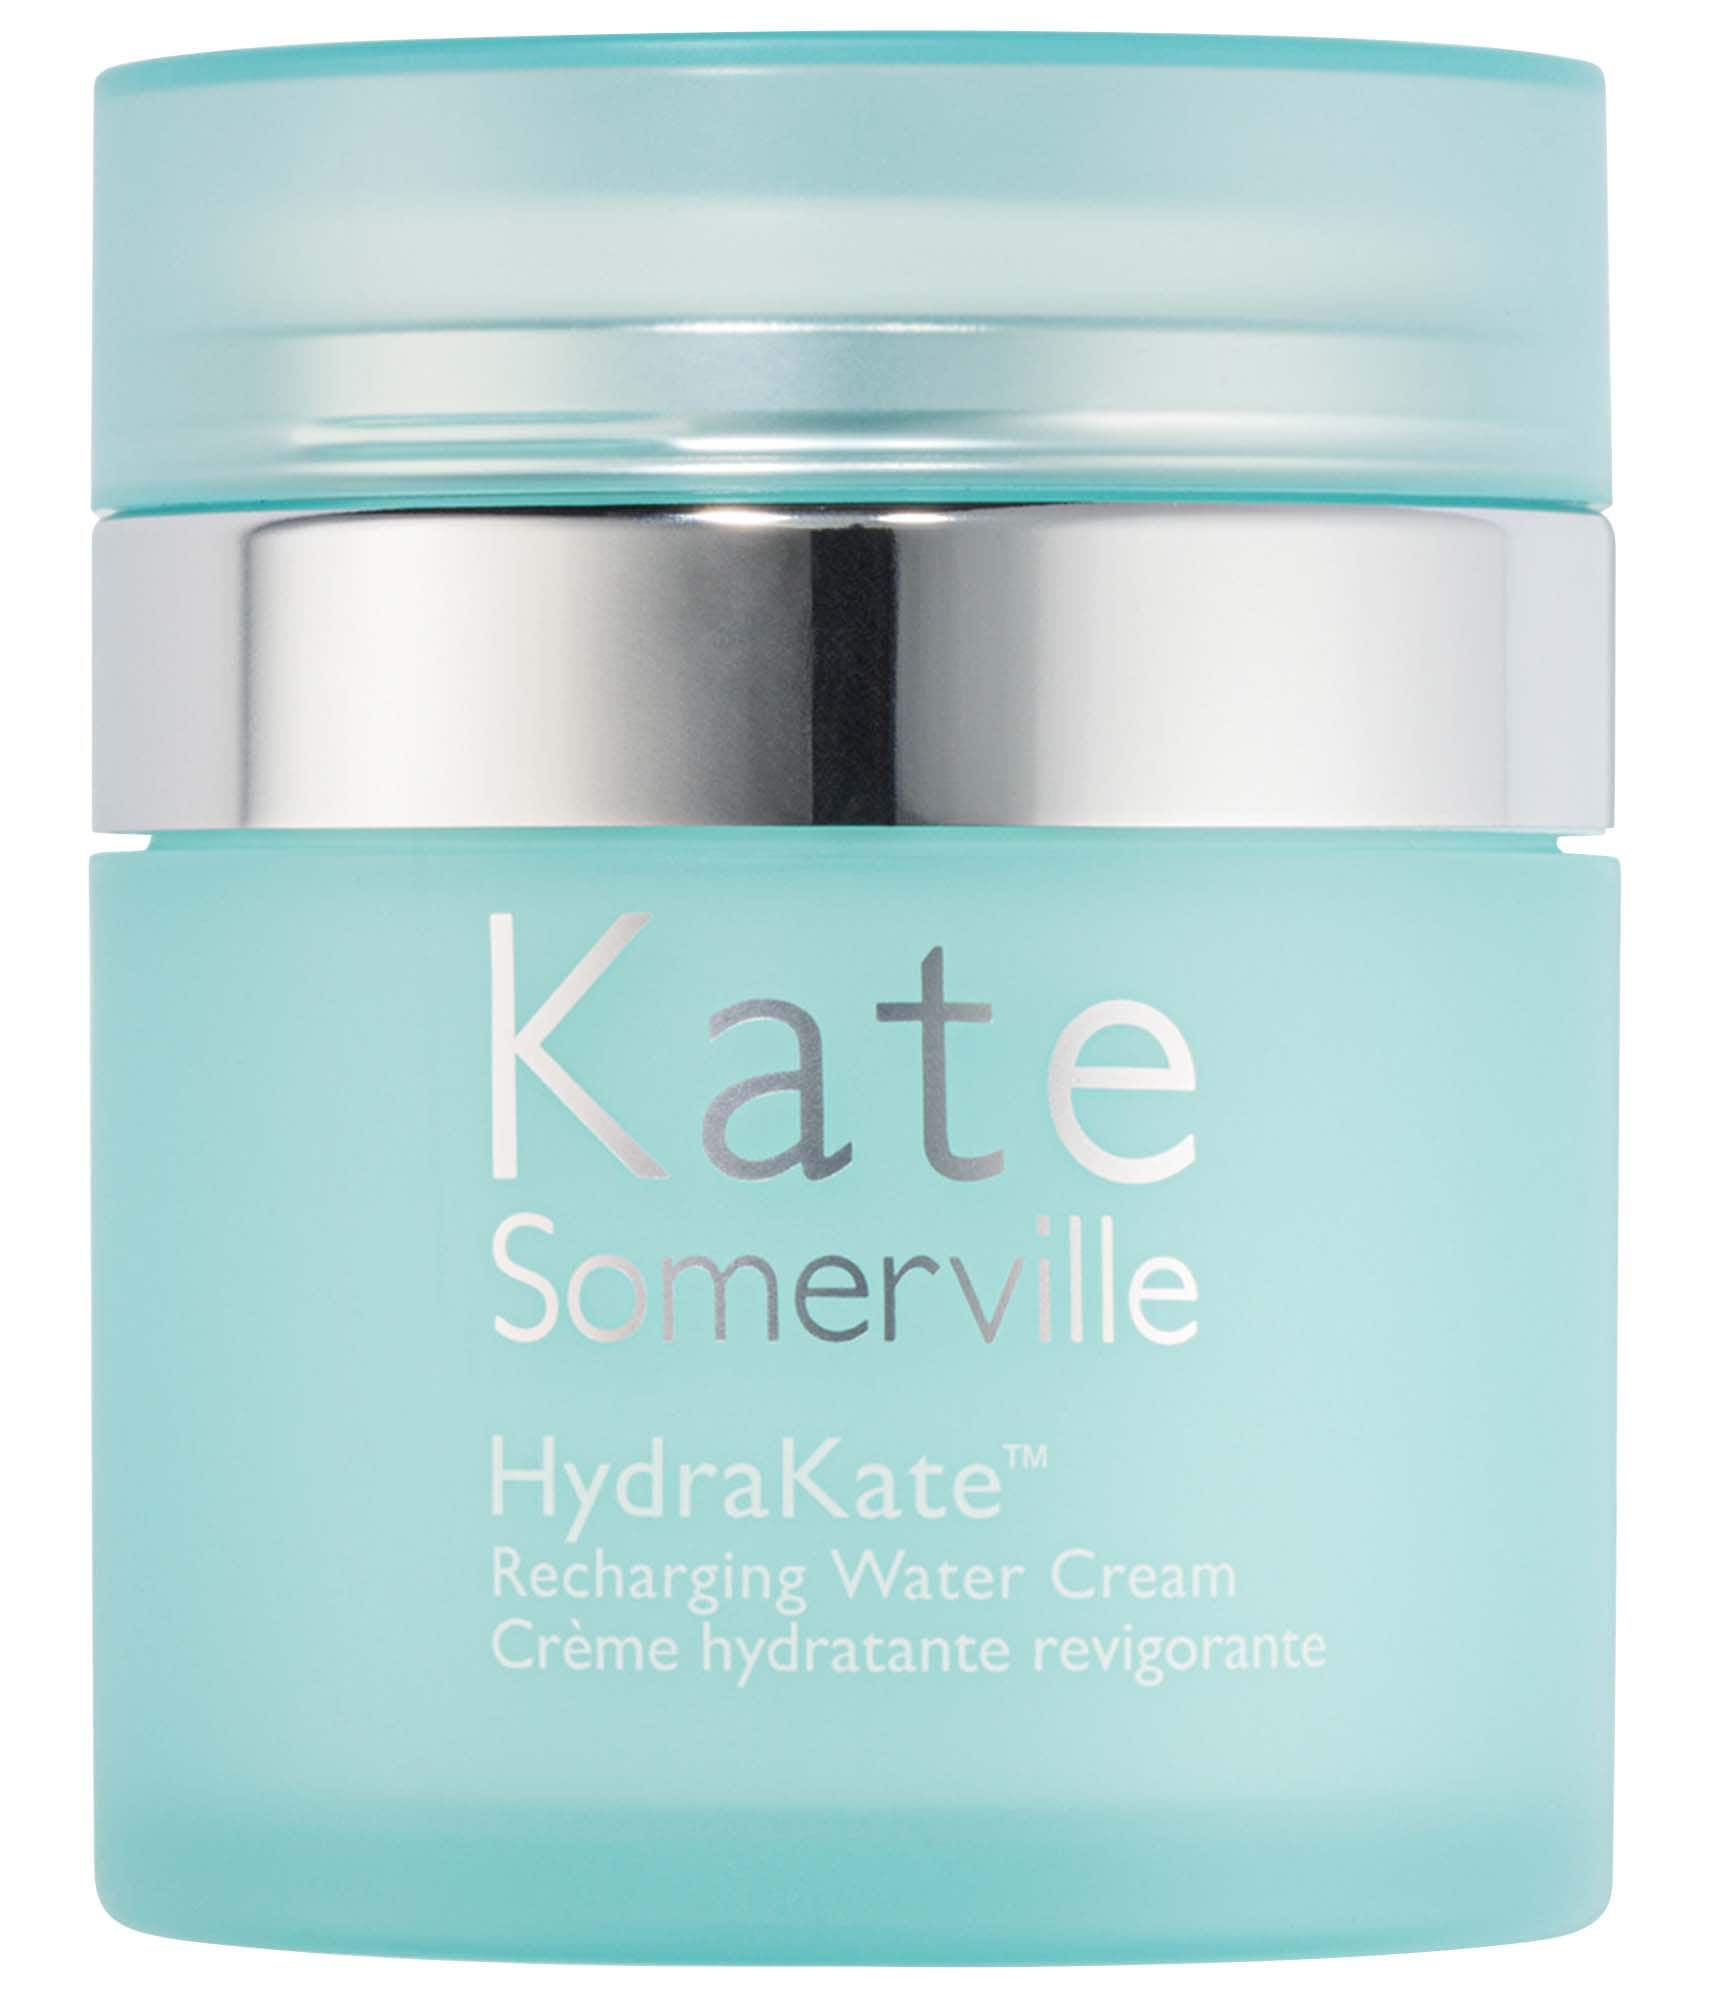 Kate Somerville Hydrakate Recharging, Water Cream